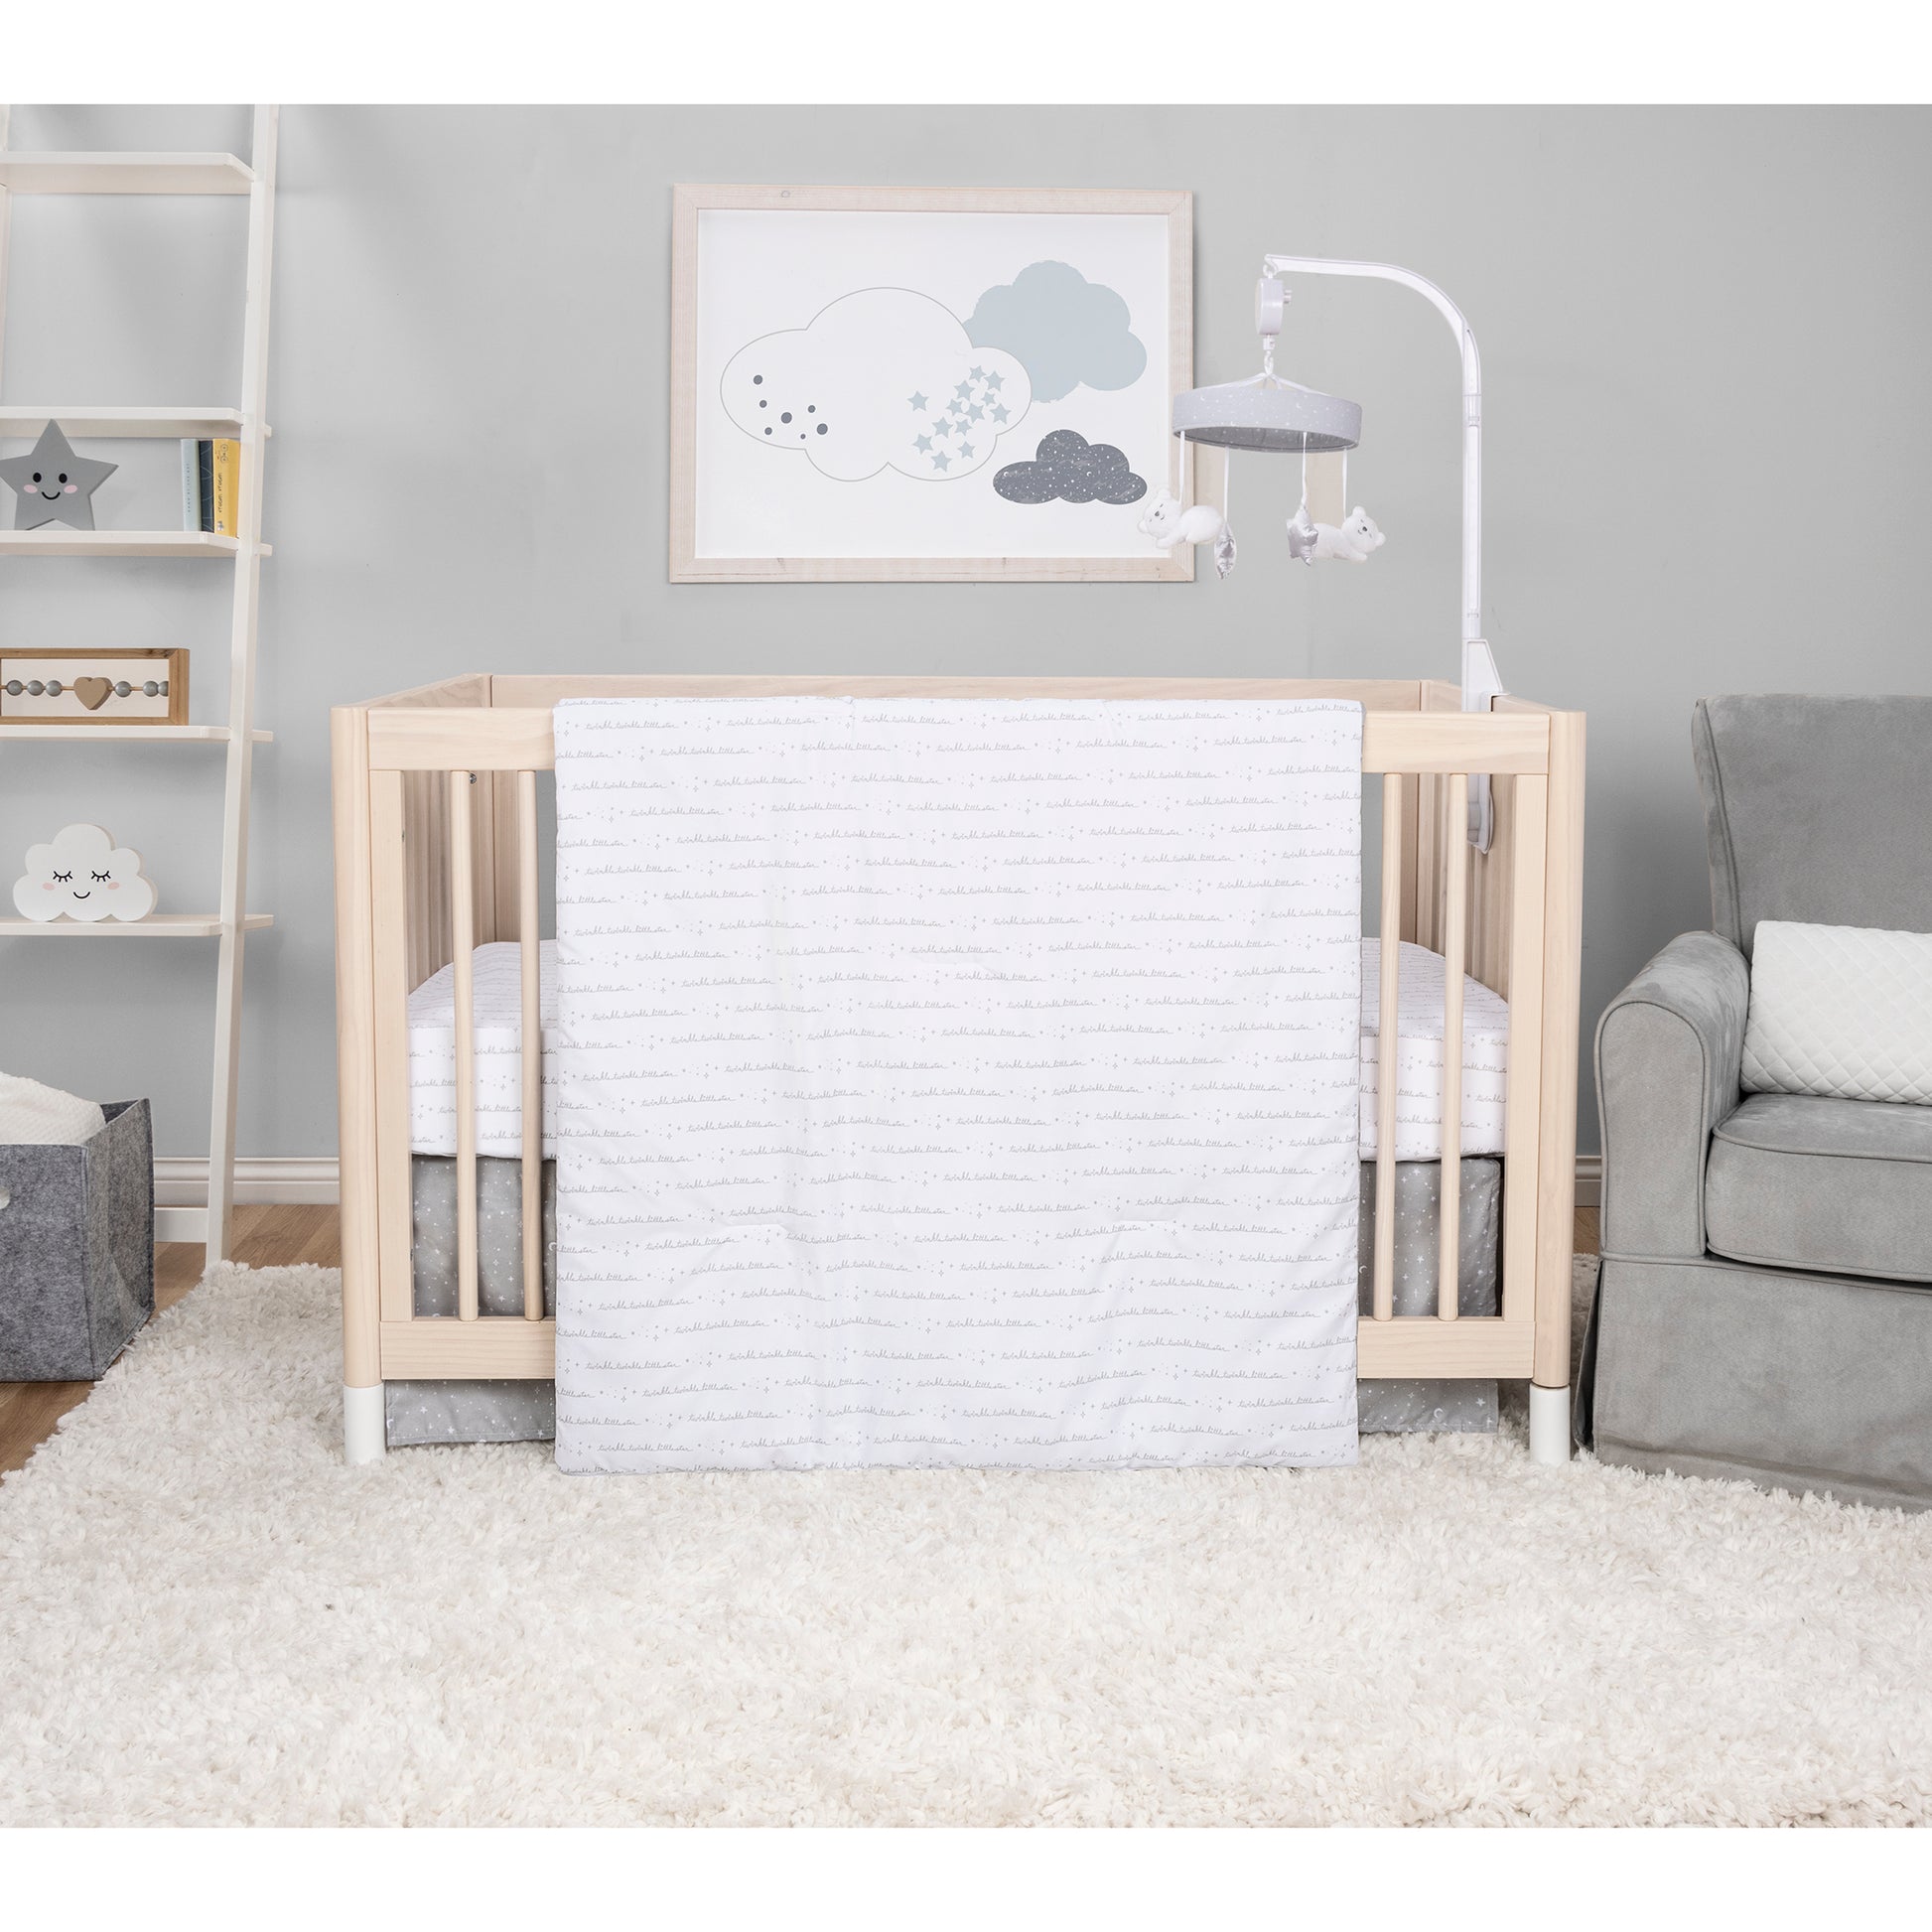 Twinkle Stars 3 Piece Crib Bedding Set by Sammy & Lou® - Stylized in a bedroom